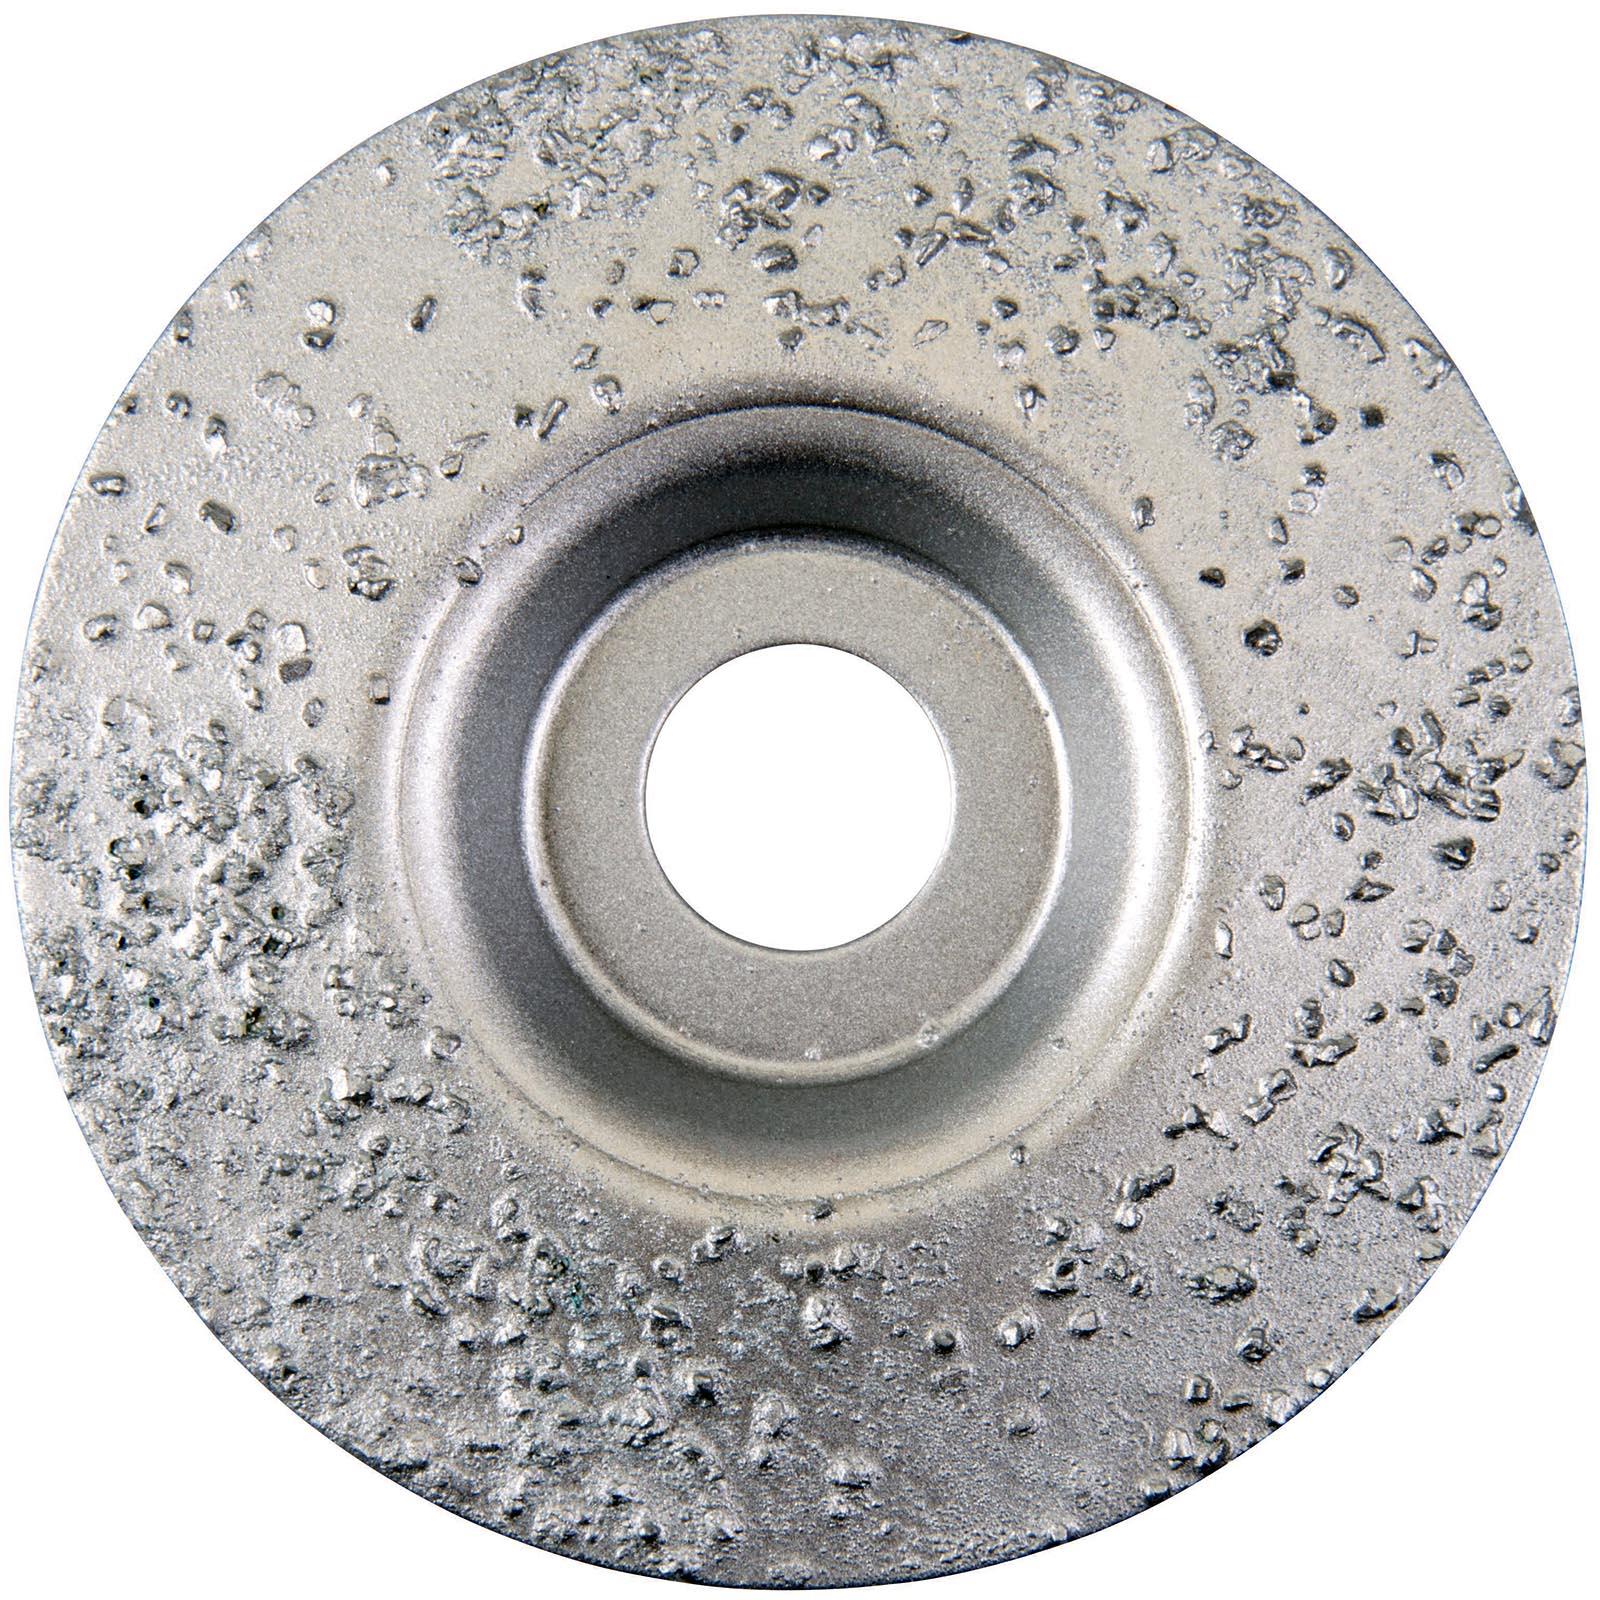 Silverline 115mm Tungsten Carbide Grinding Disc 115 x 22.2mm Concrete Tile Rust